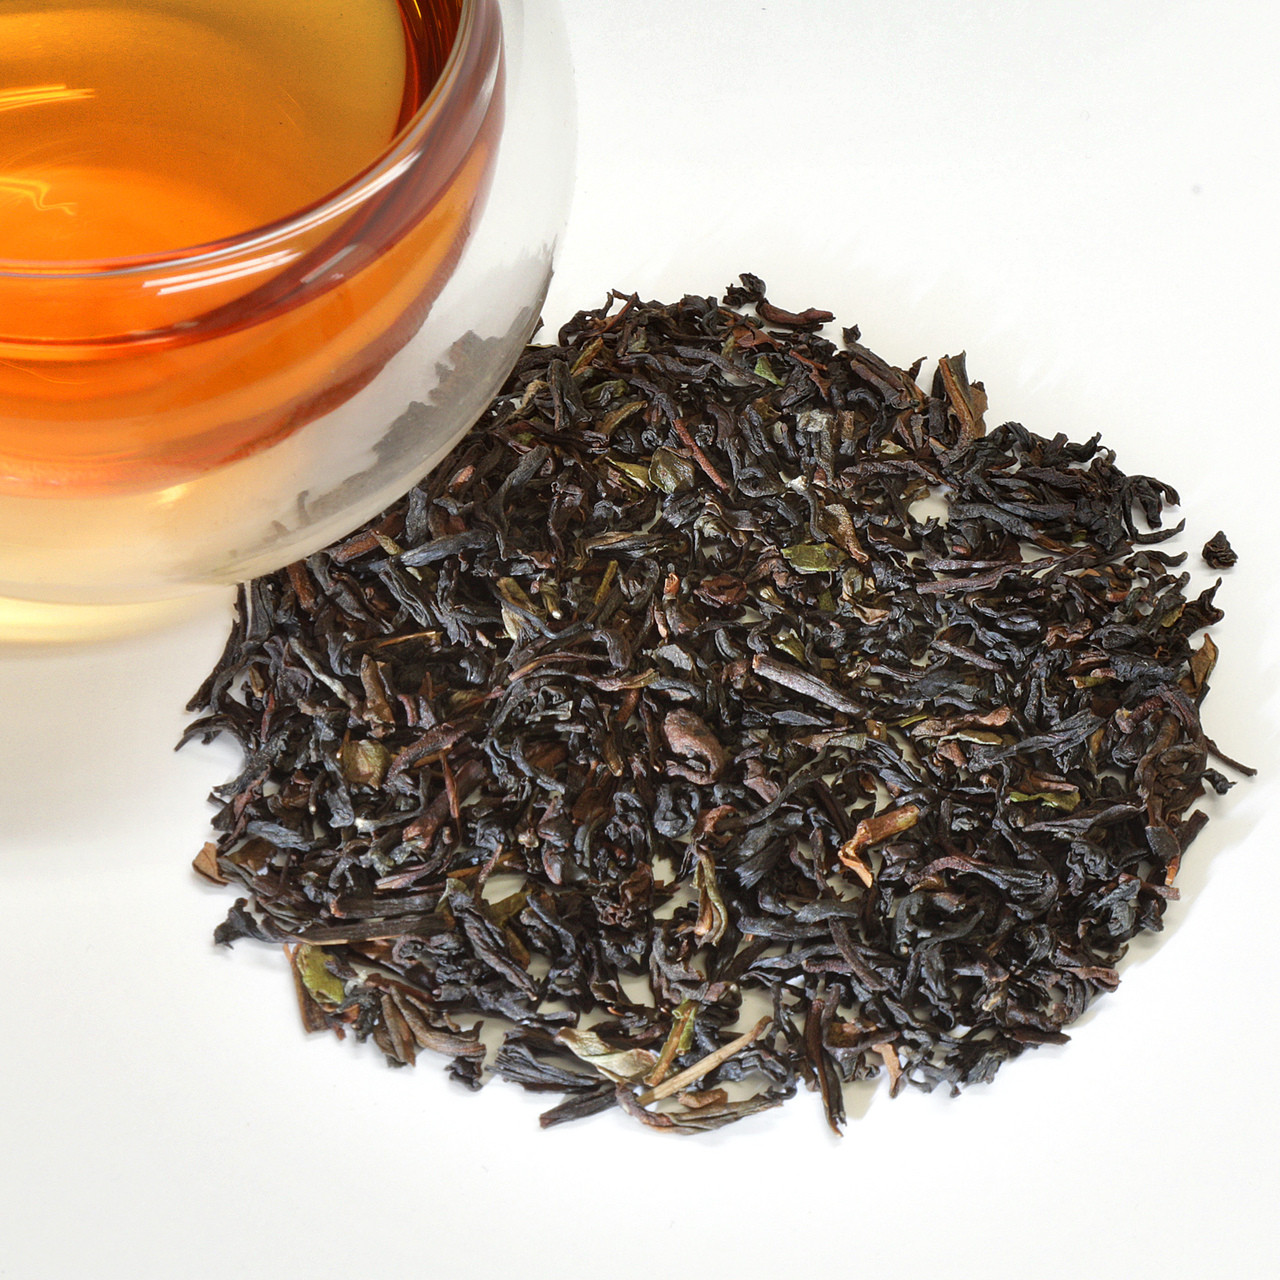 The name Darjeeling Tea is tantamount to